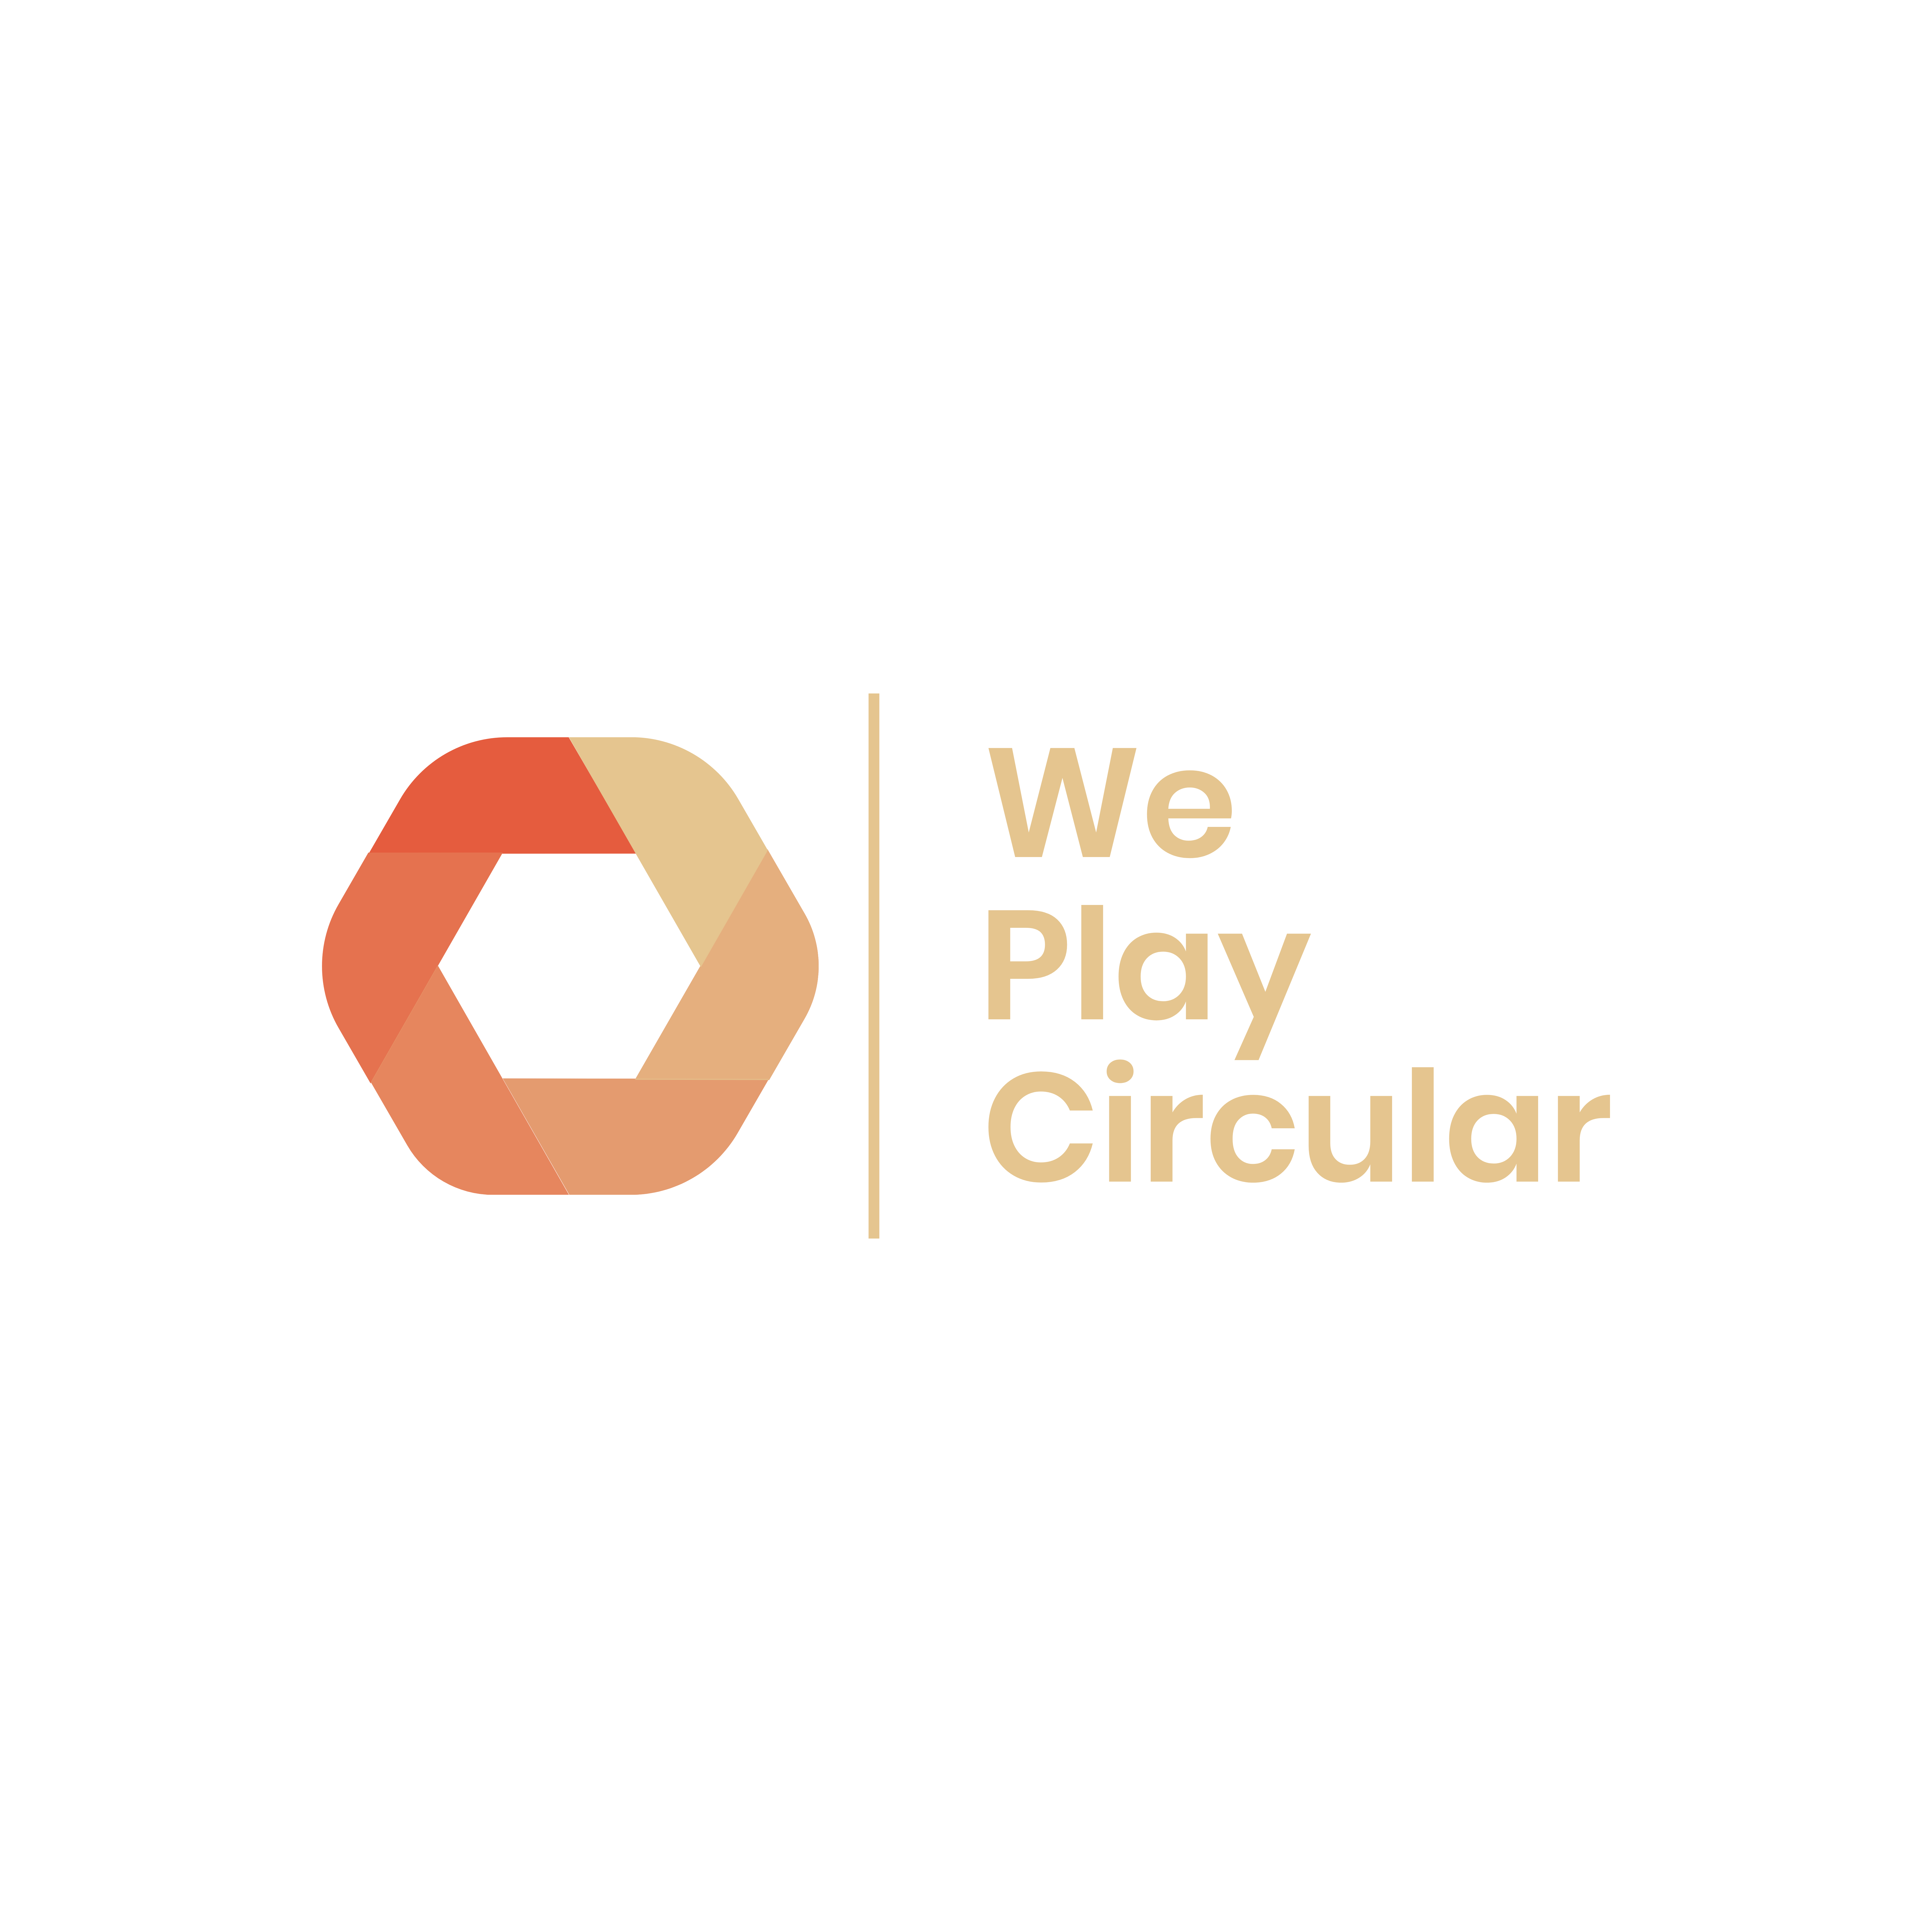 We Play Circular_We Play Circular